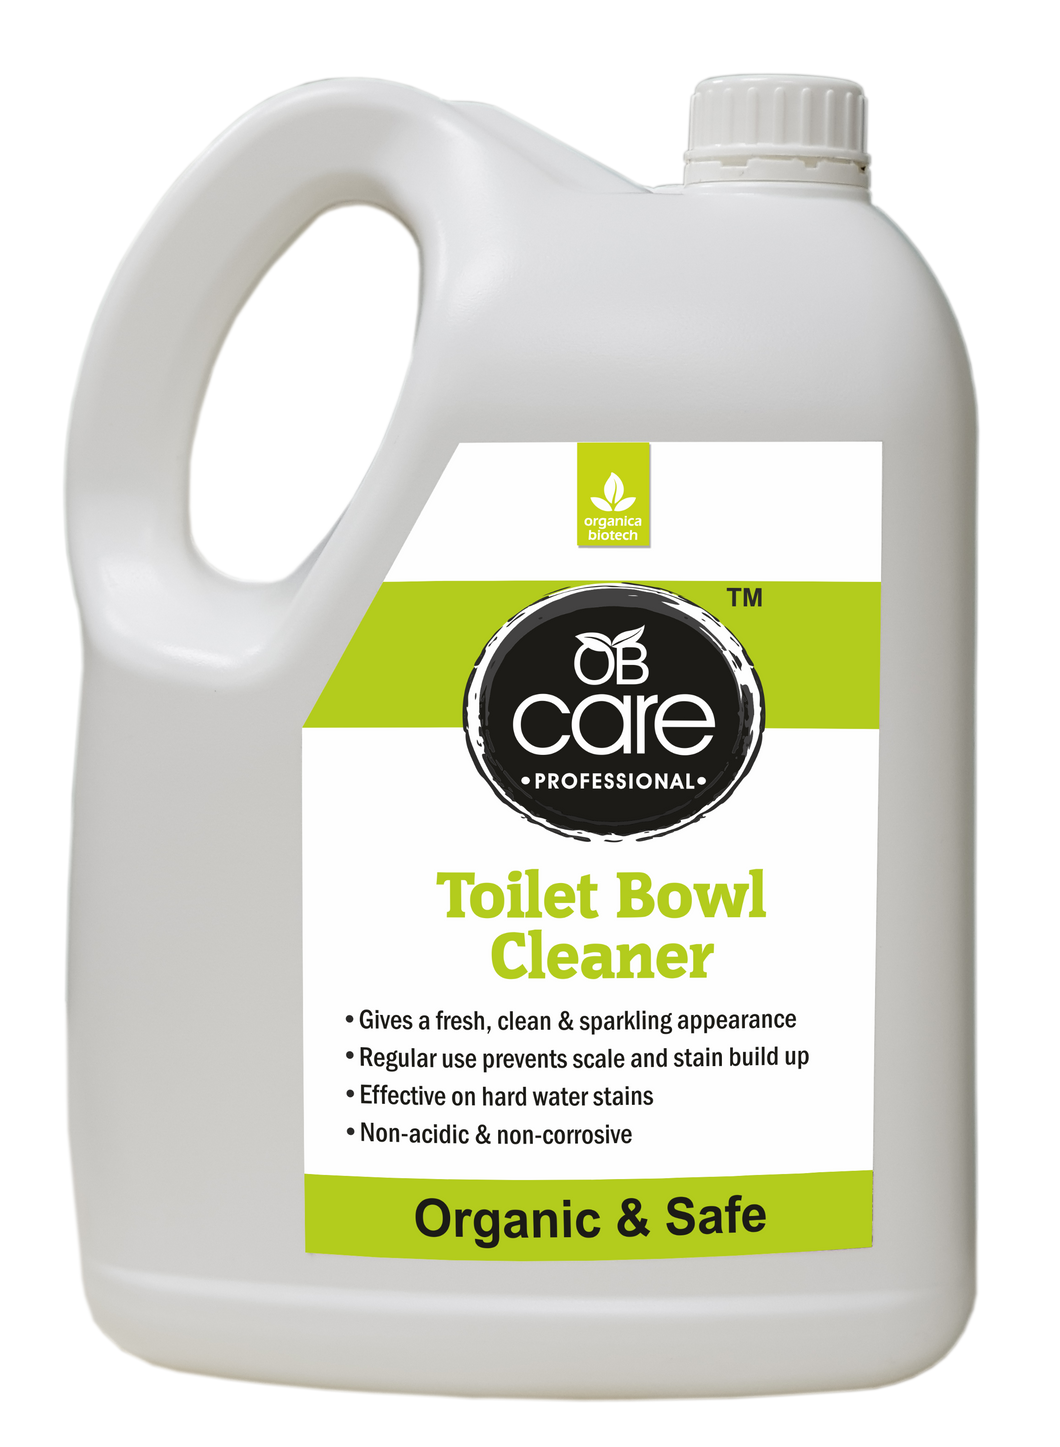 OB Care Toilet Bowl Cleaner